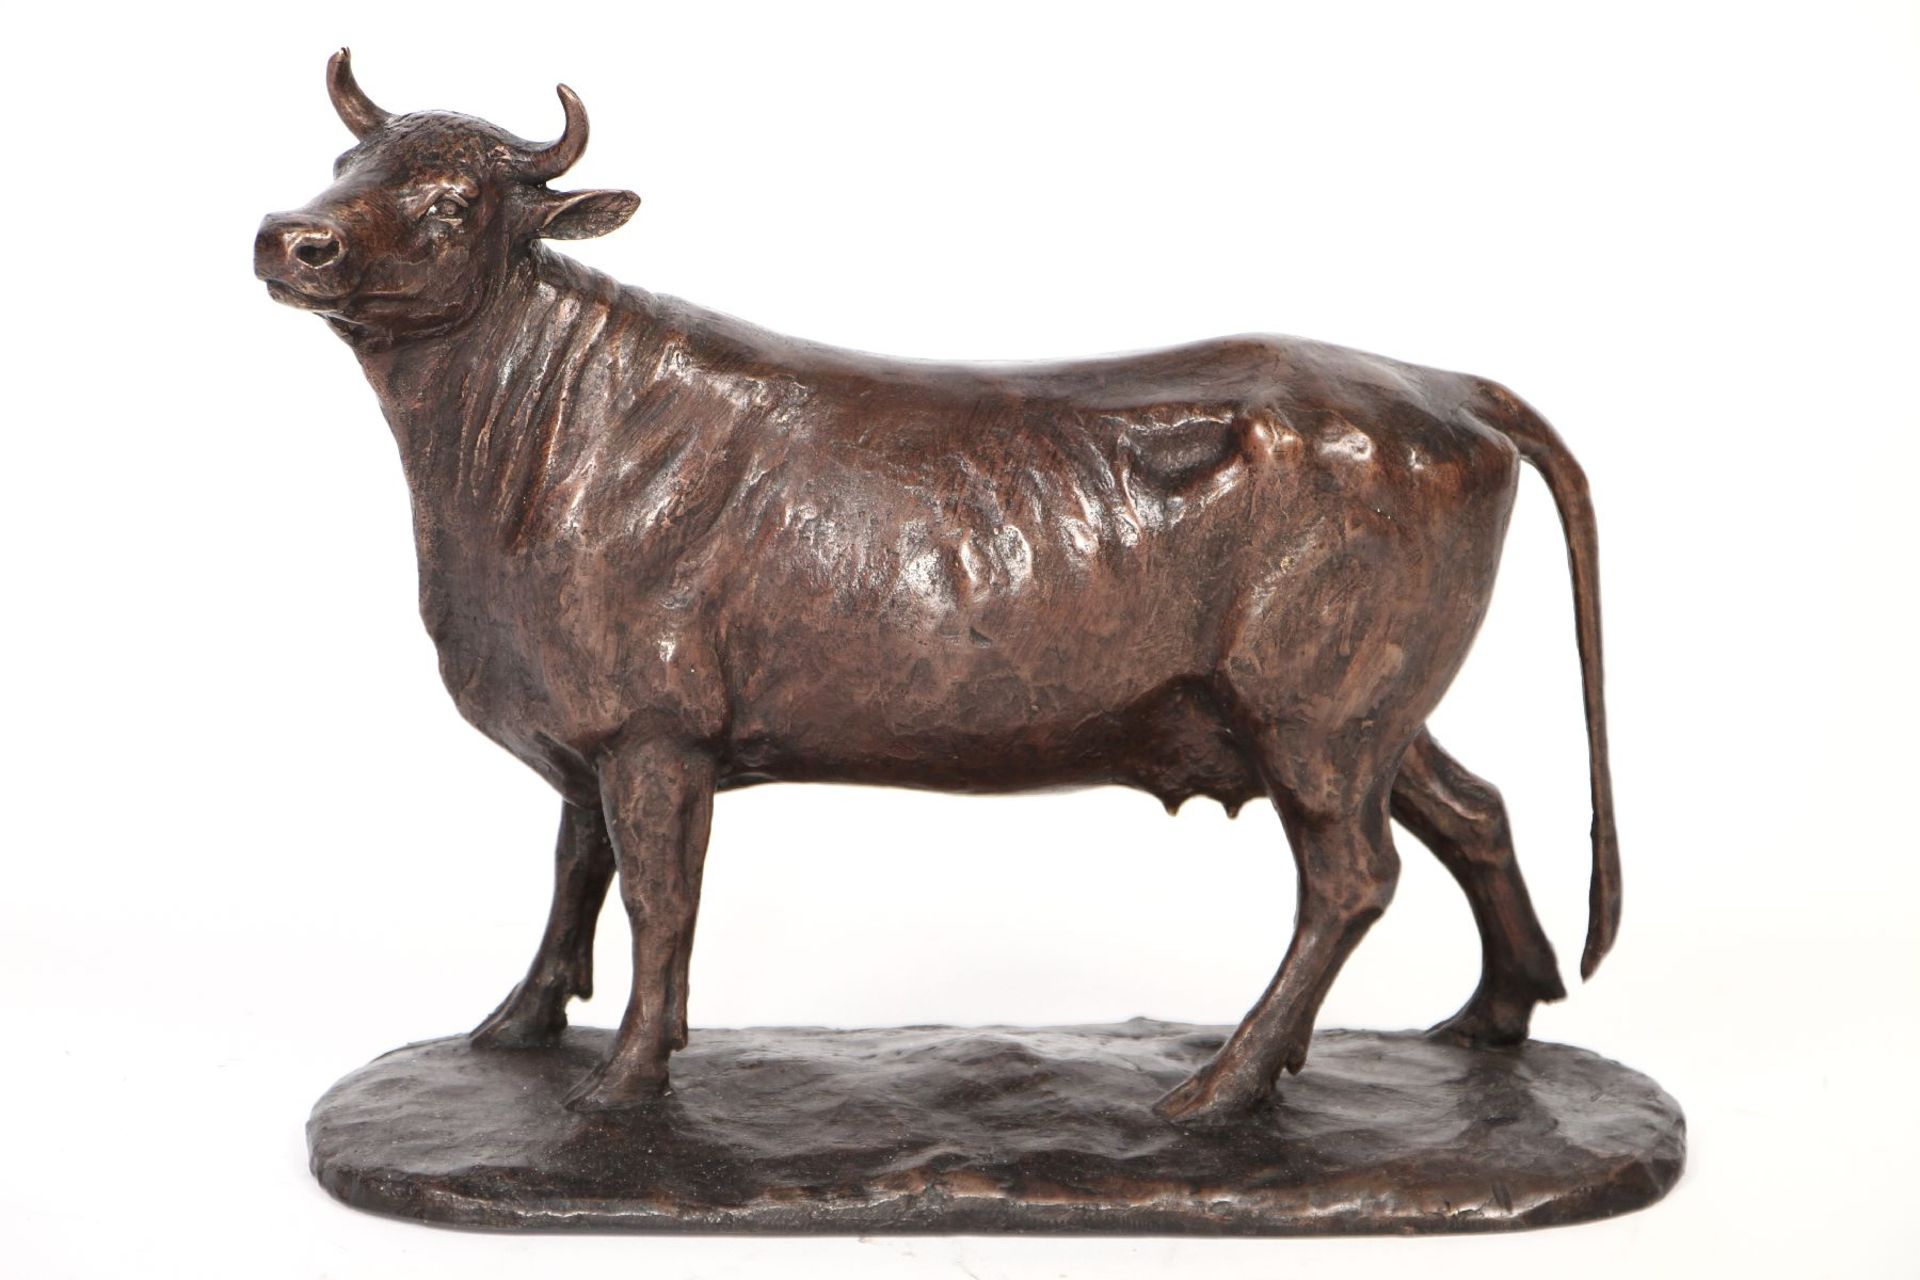 Cow, bronze, dark brown and golden brown patinated, naturalistic representation, detailed vivid